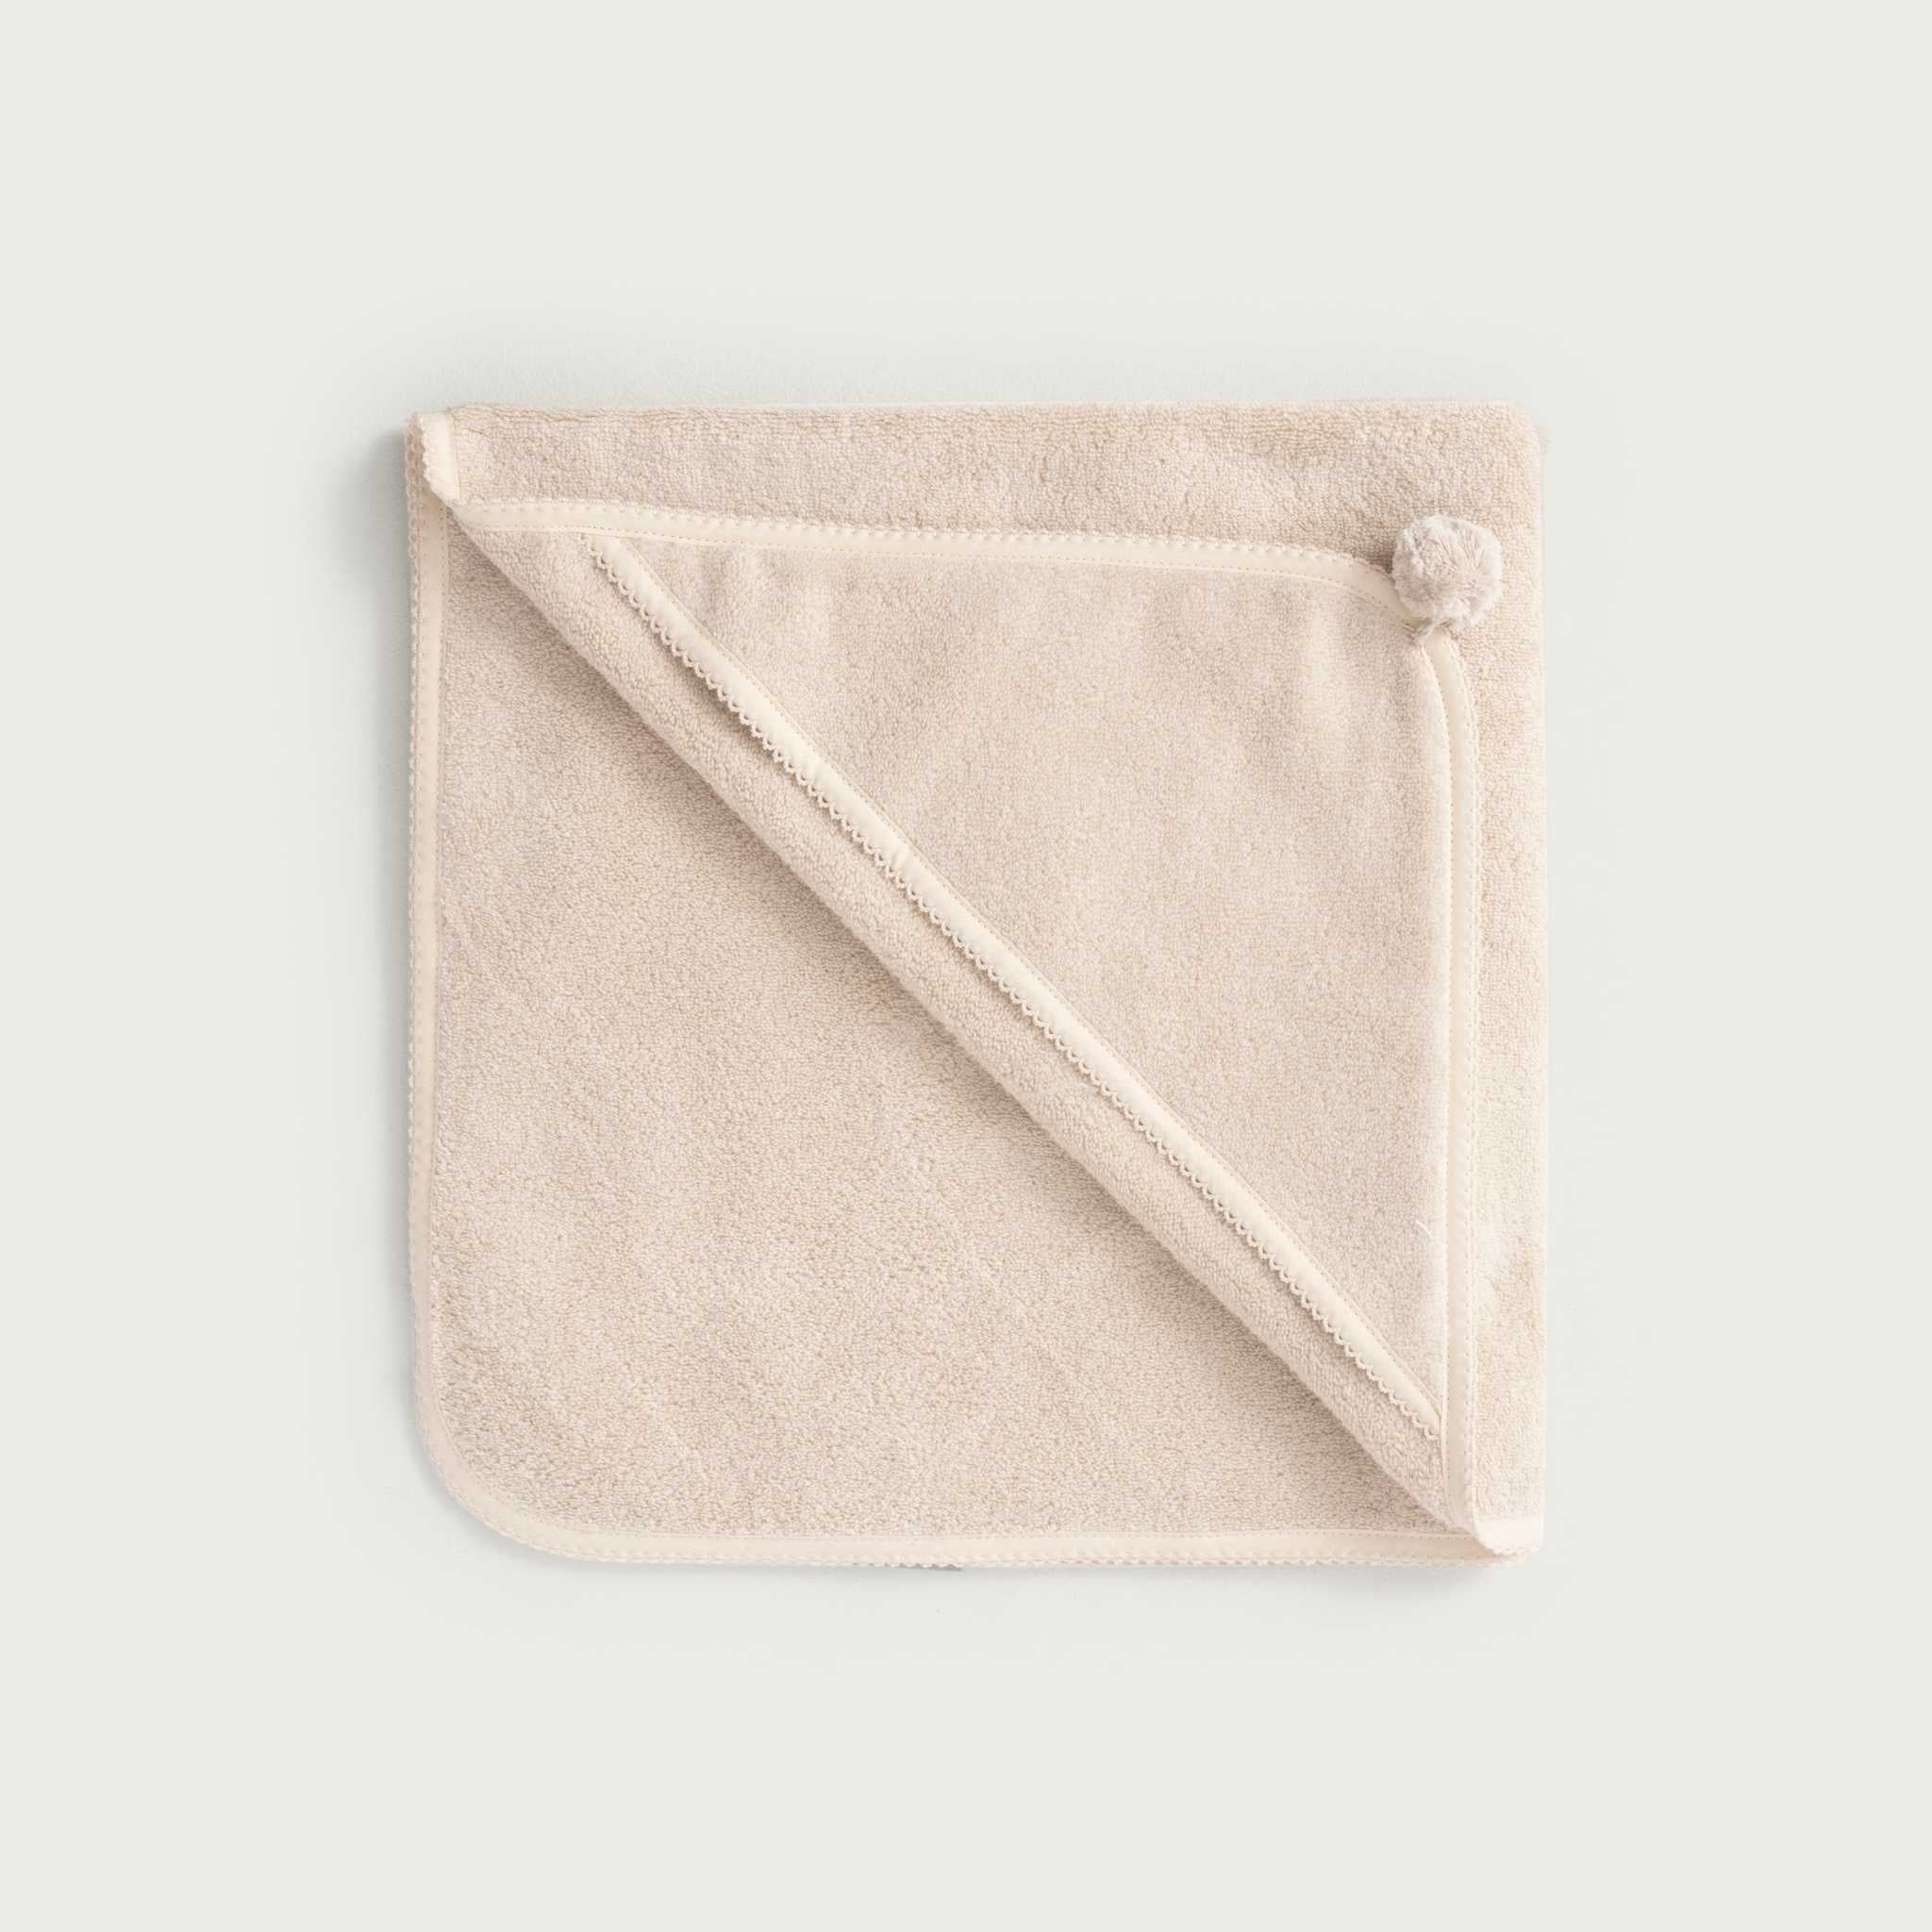 Garbo & Friends Hooded Towel - Sand - Folded